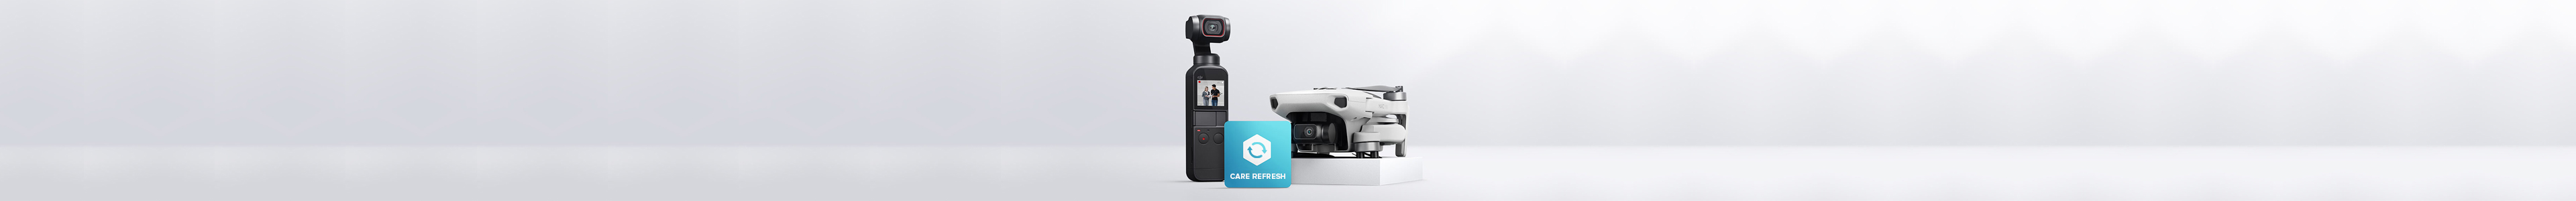 DJI Care Refresh Get Replacements if You Crash!